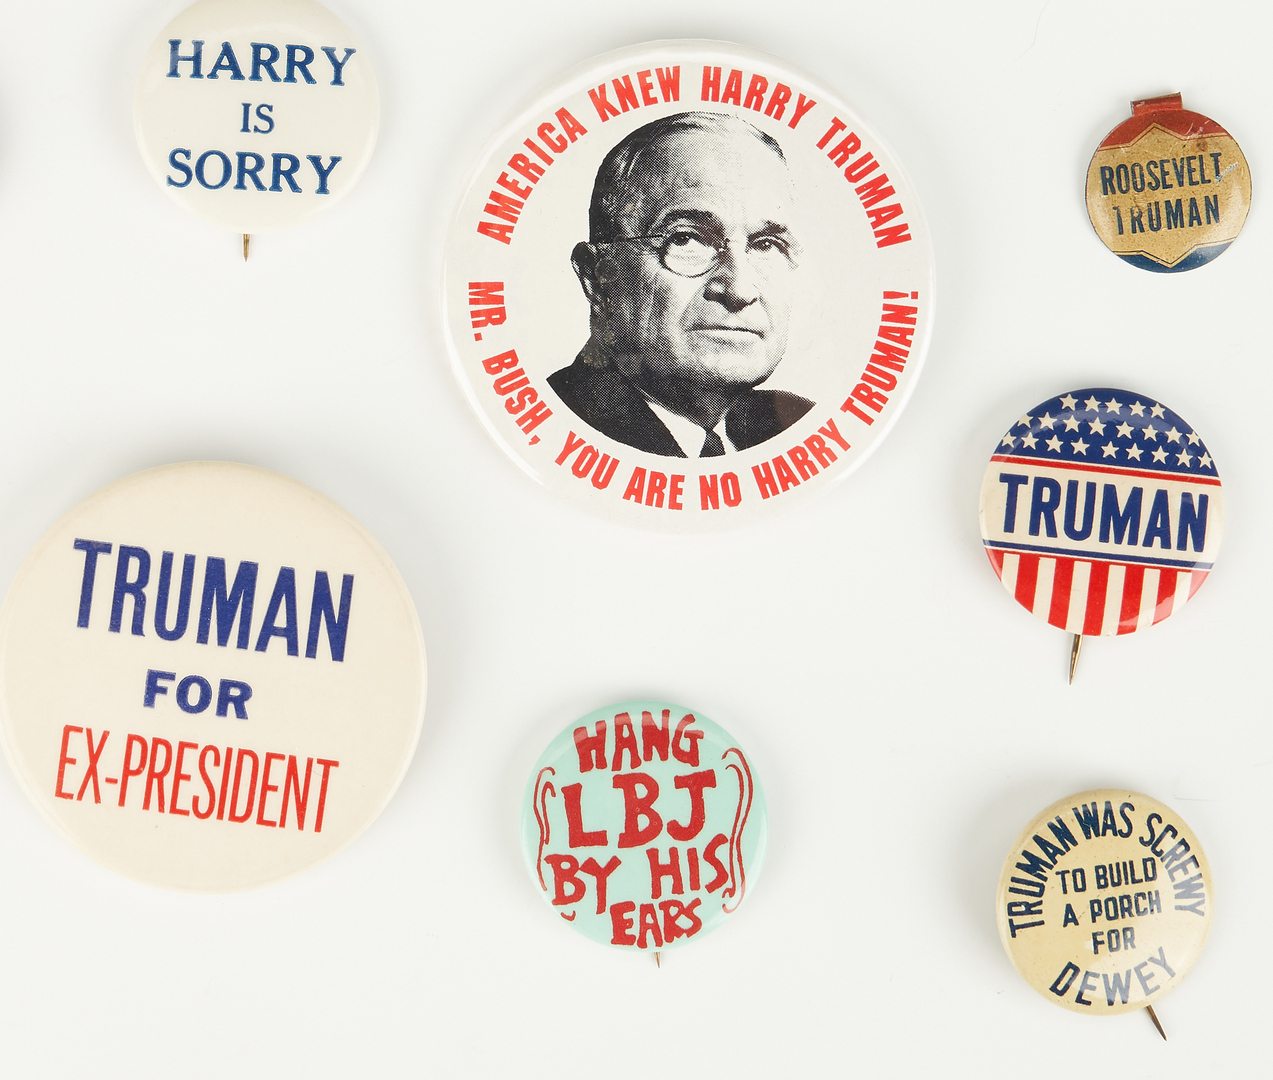 Lot 1013: 13 Political Ephemera Items, incl. Truman, Johnson